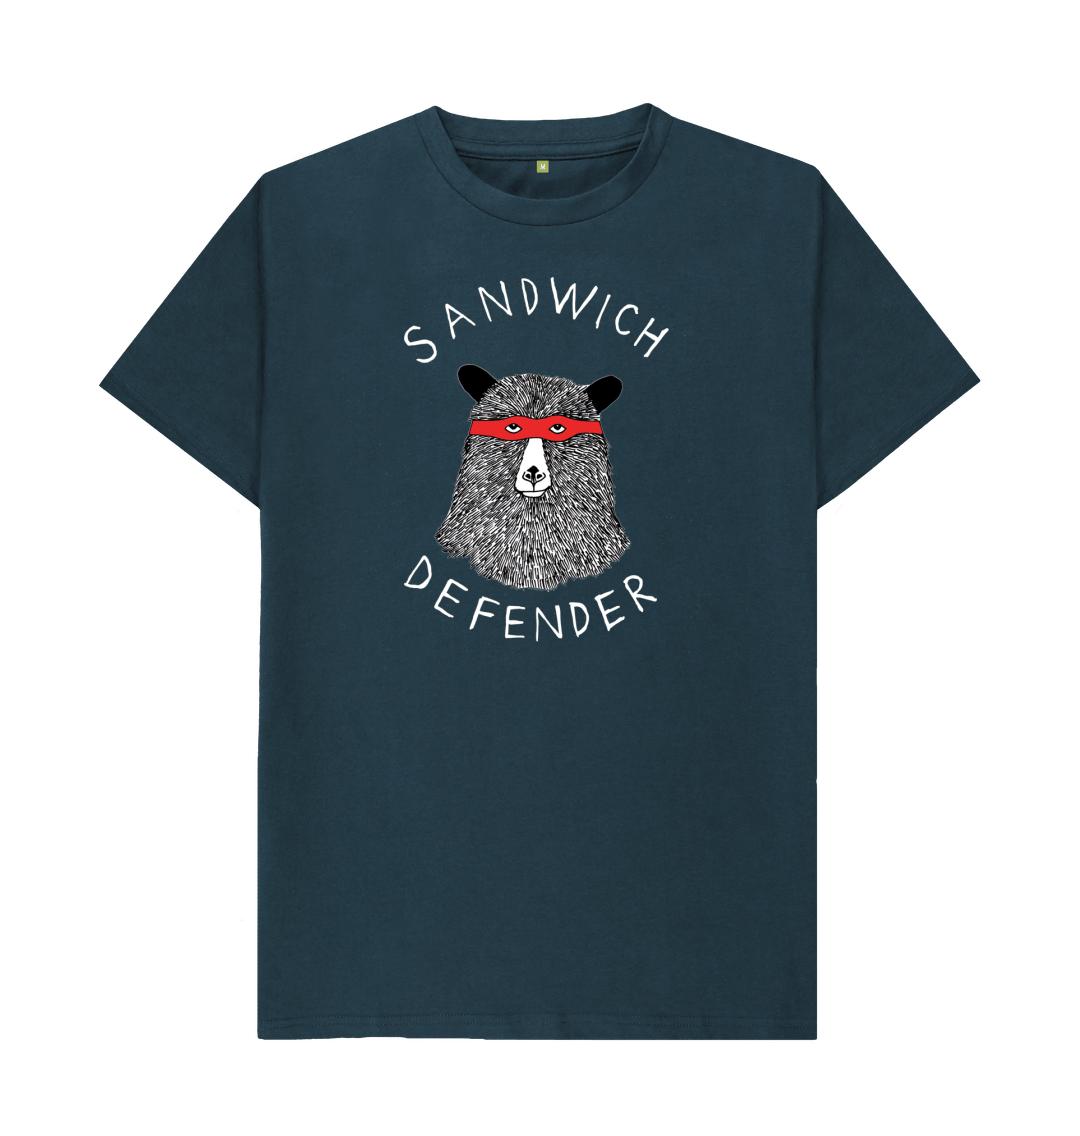 Denim Blue 'Sandwich Defender' Men's T-shirt